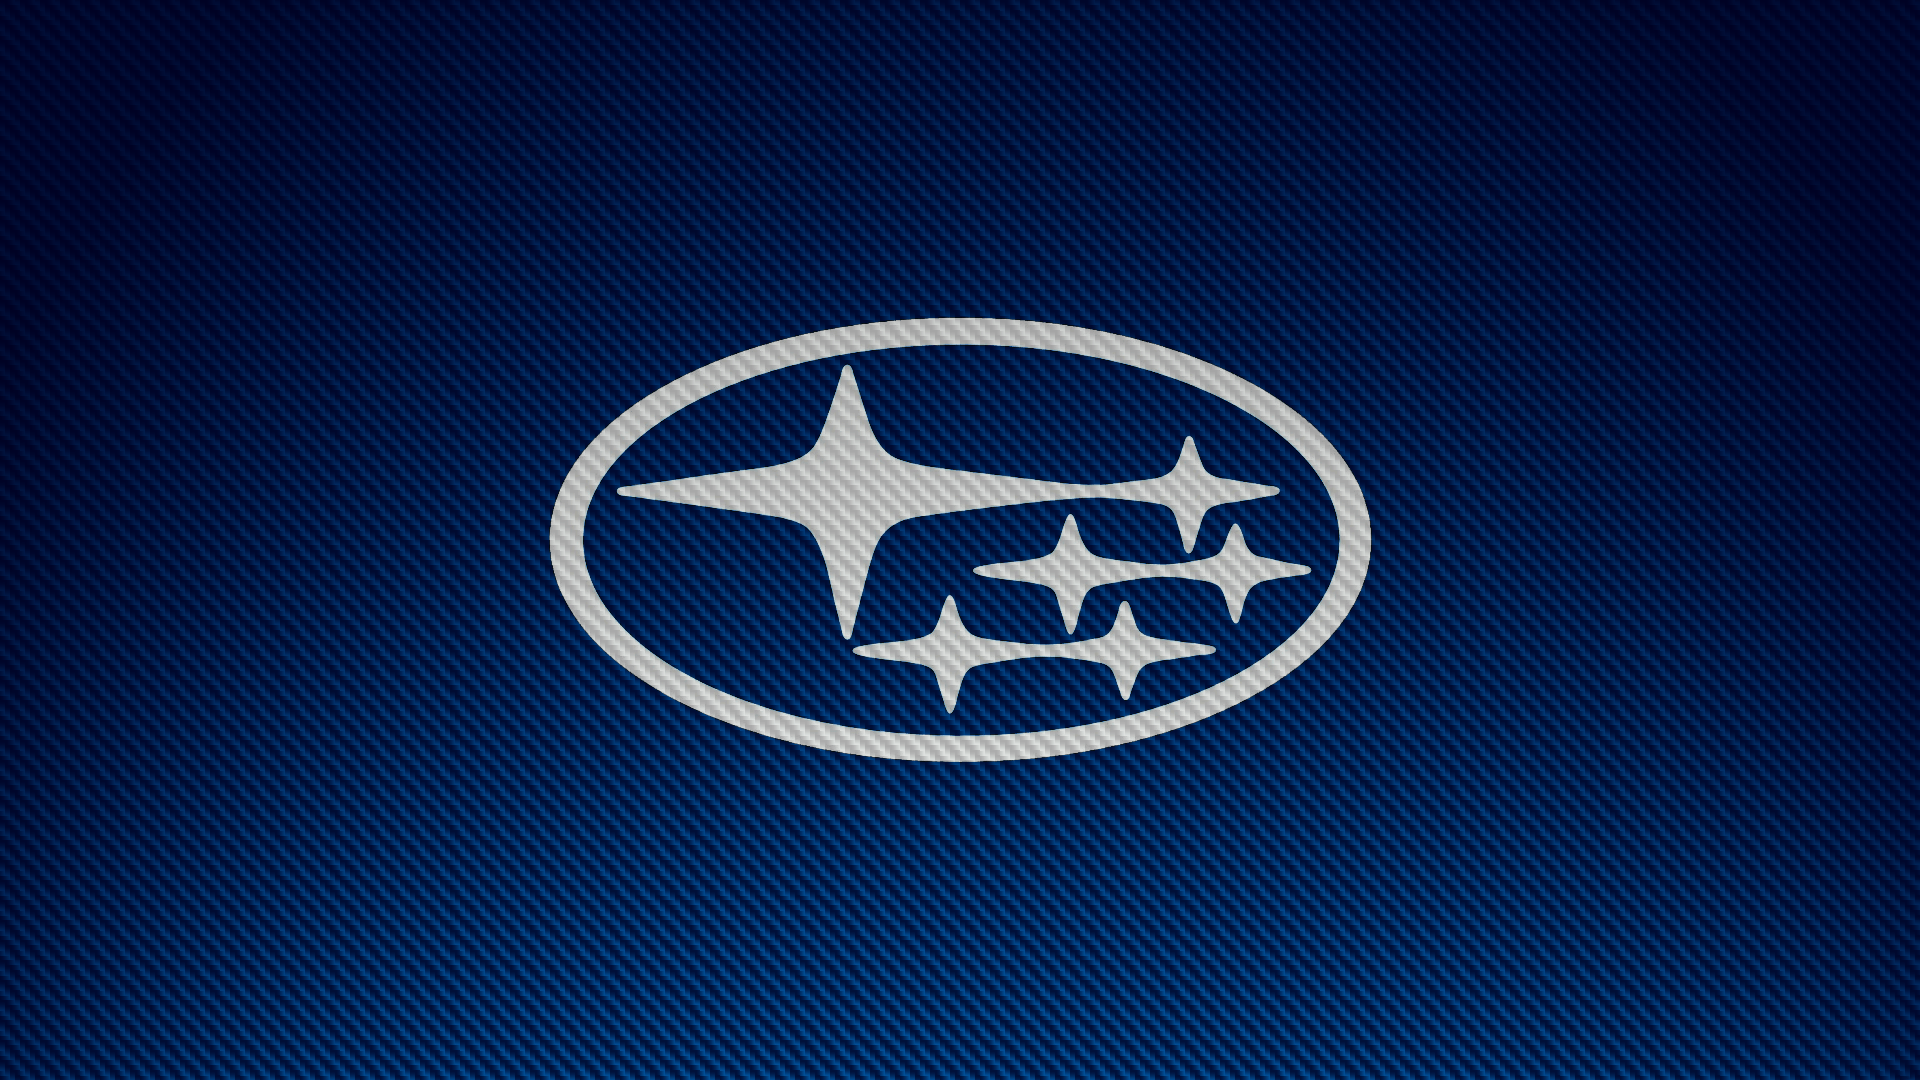 Subaru Logo Wallpaper High Definition. Interesante